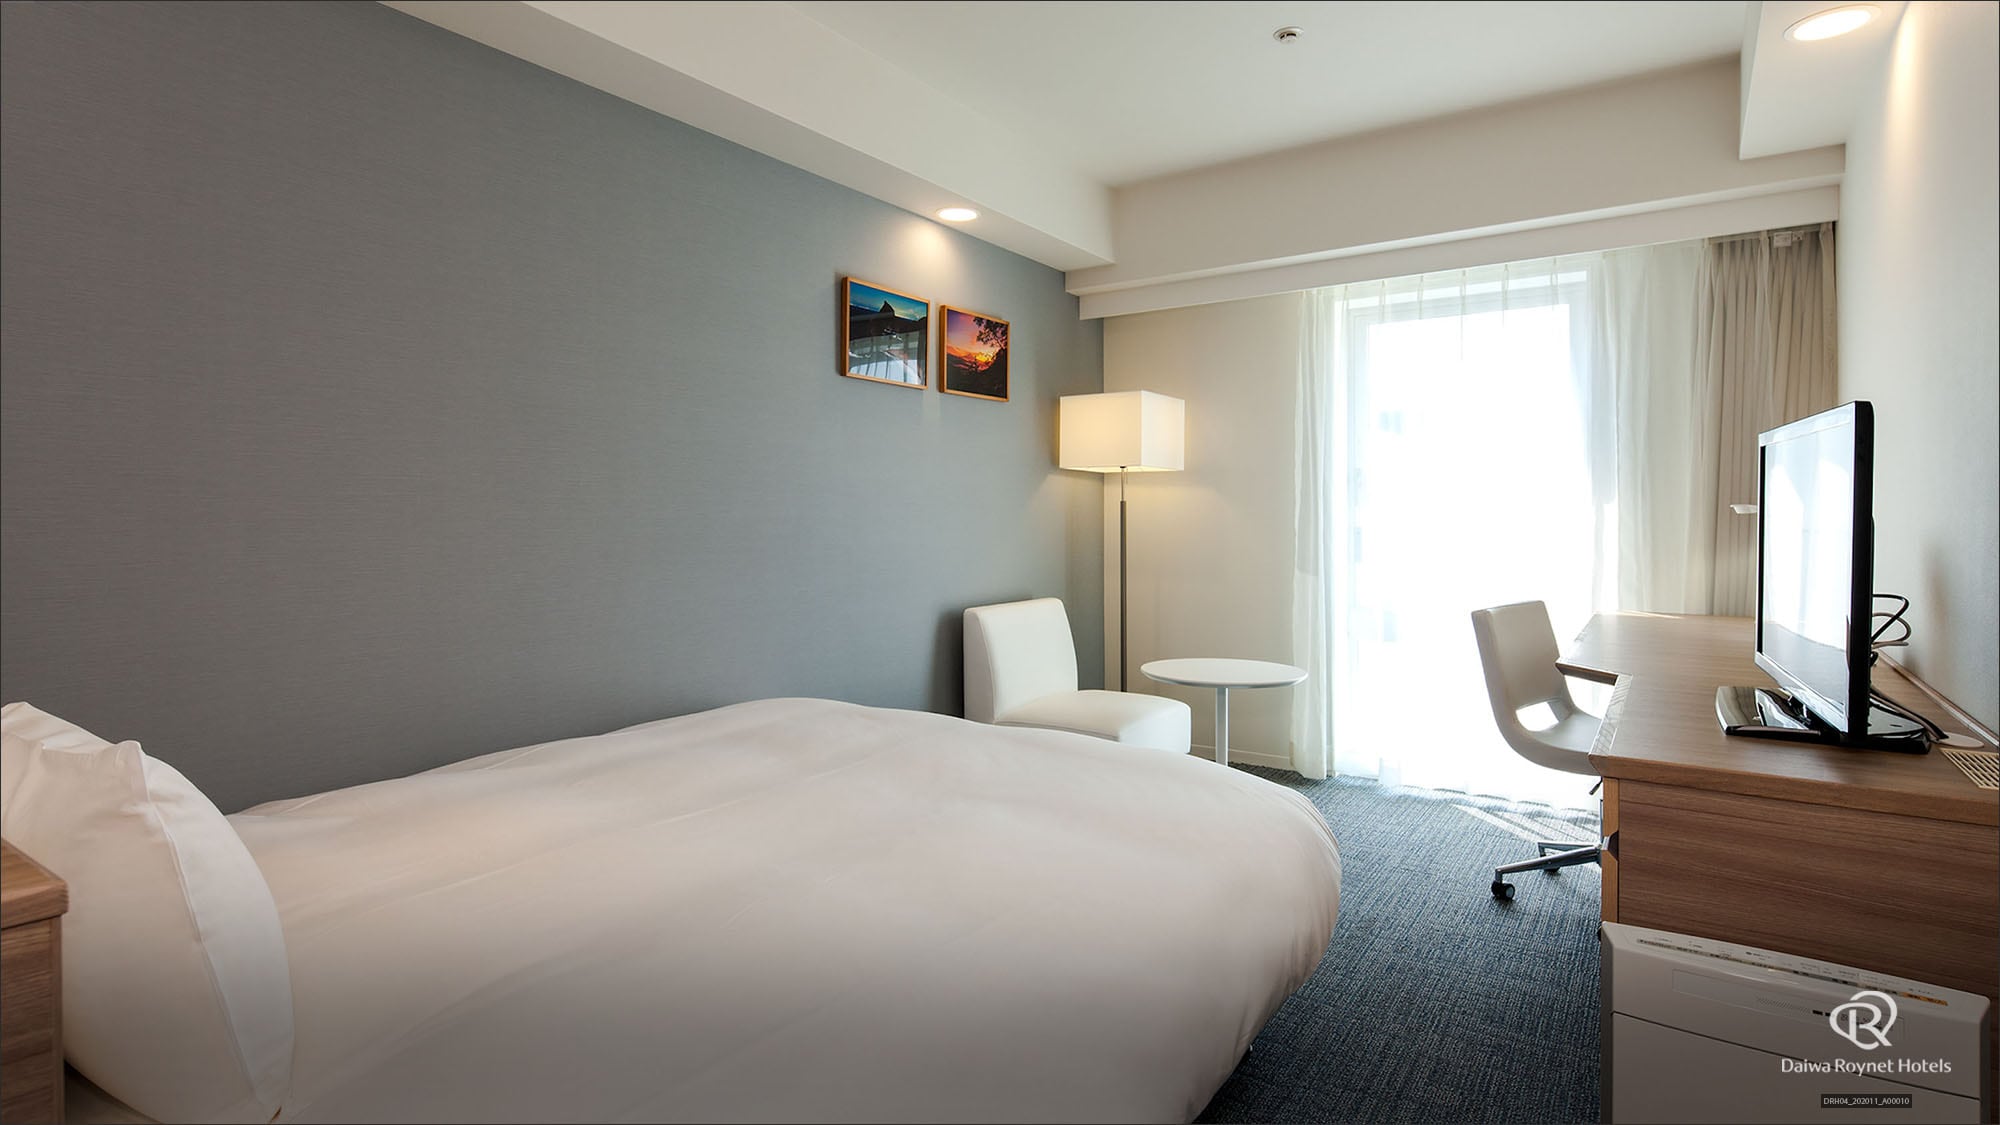 Standard single room Room area: 20㎡ Bed size 154cm